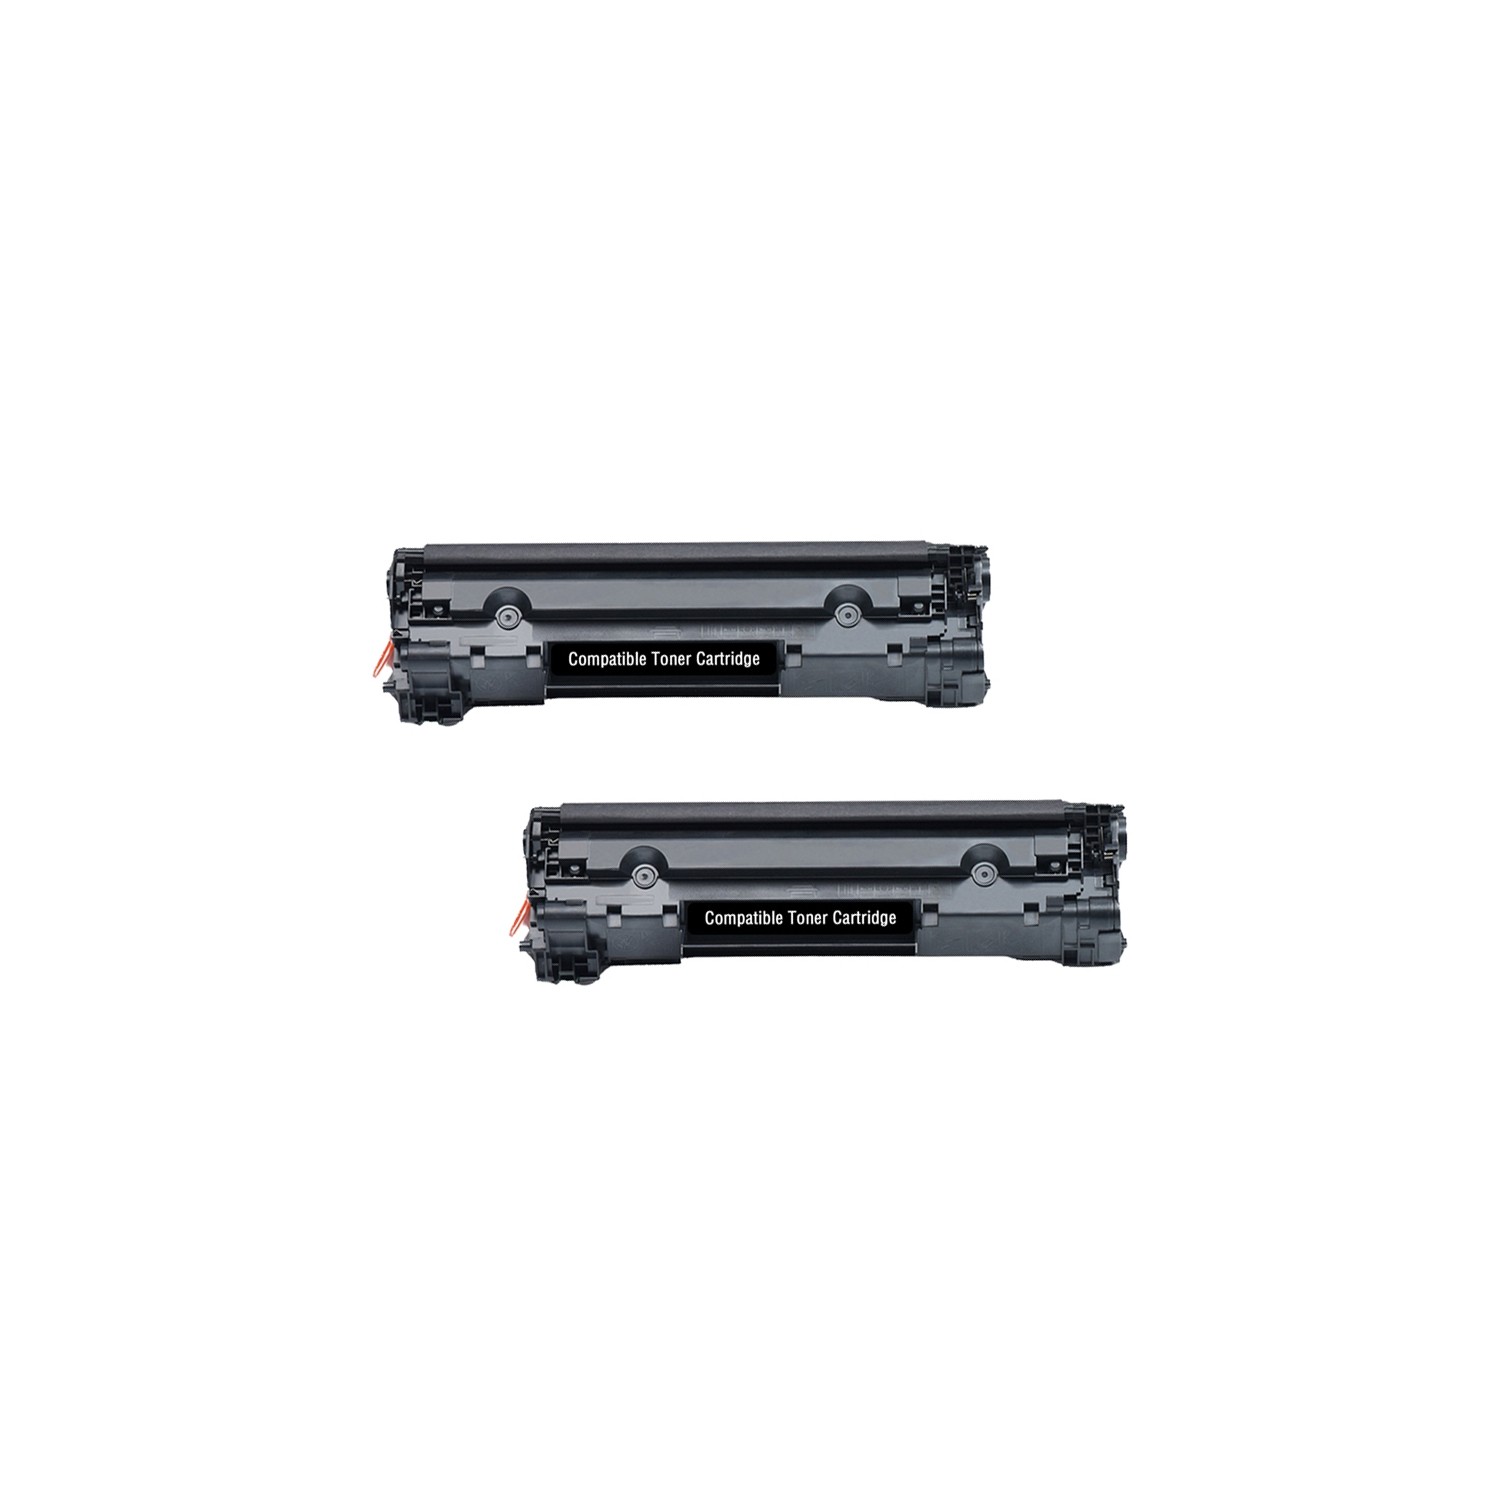 2 Pack HYFAI Toner Cartridge CF283A compatible for HP 83A CF283A LaserJet Pro MFP M127fn, MFP M127fw, MFP M125nw,MFP M225dn,Pro M201n,Pro M201dw